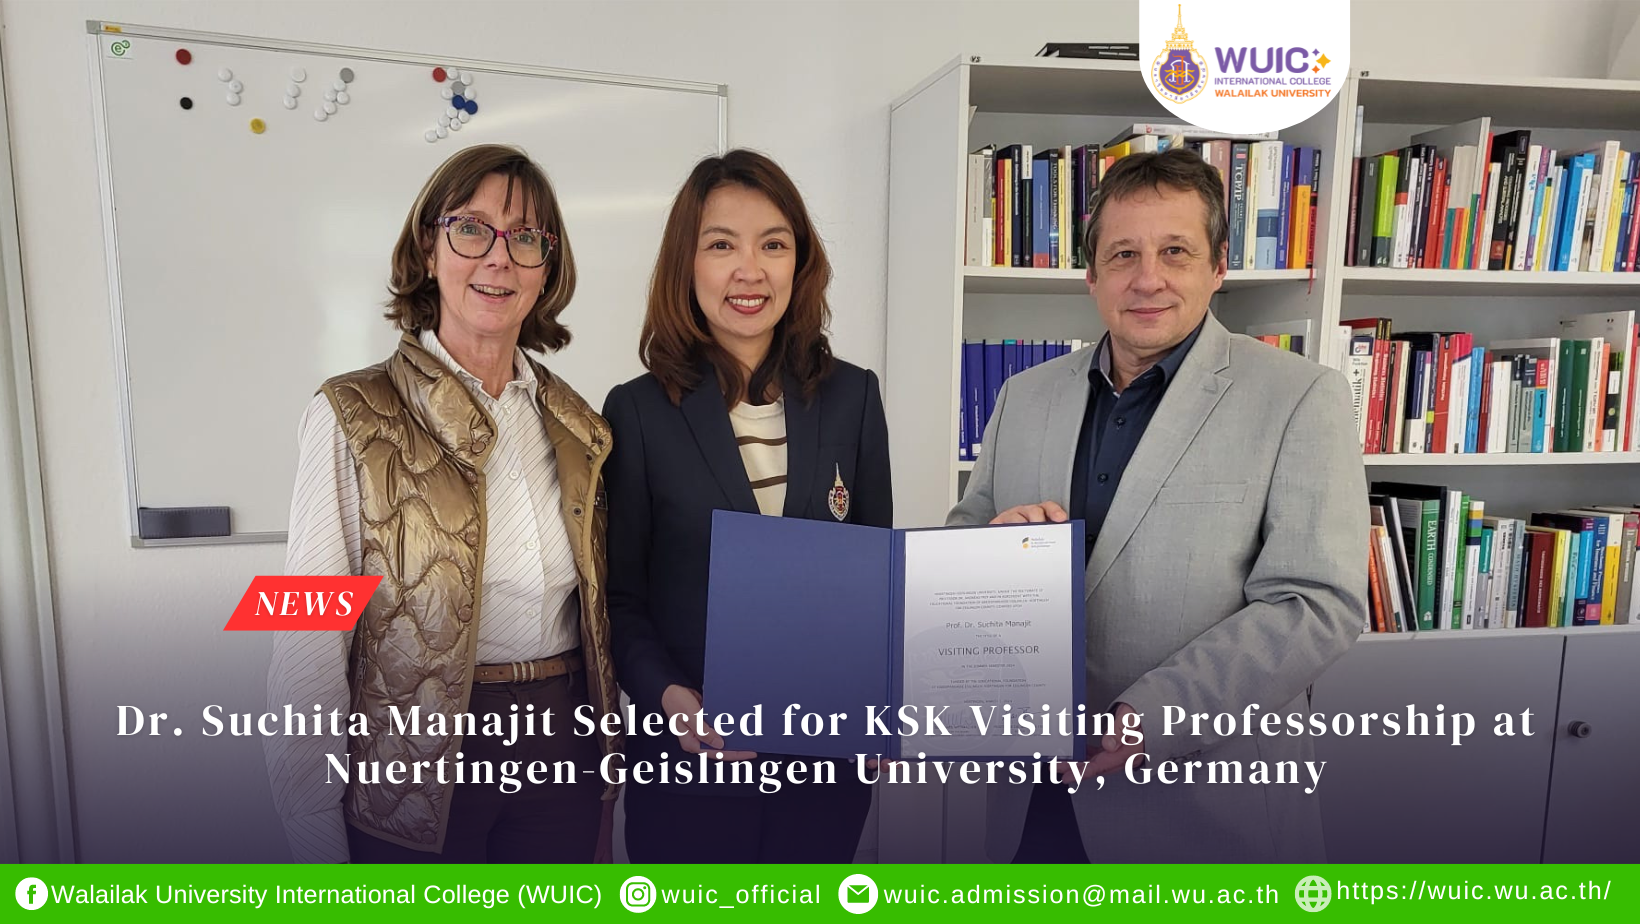 Dr. Suchita Manajit Selected for KSK Visiting Professorship at Nuertingen-Geislingen University, Germany